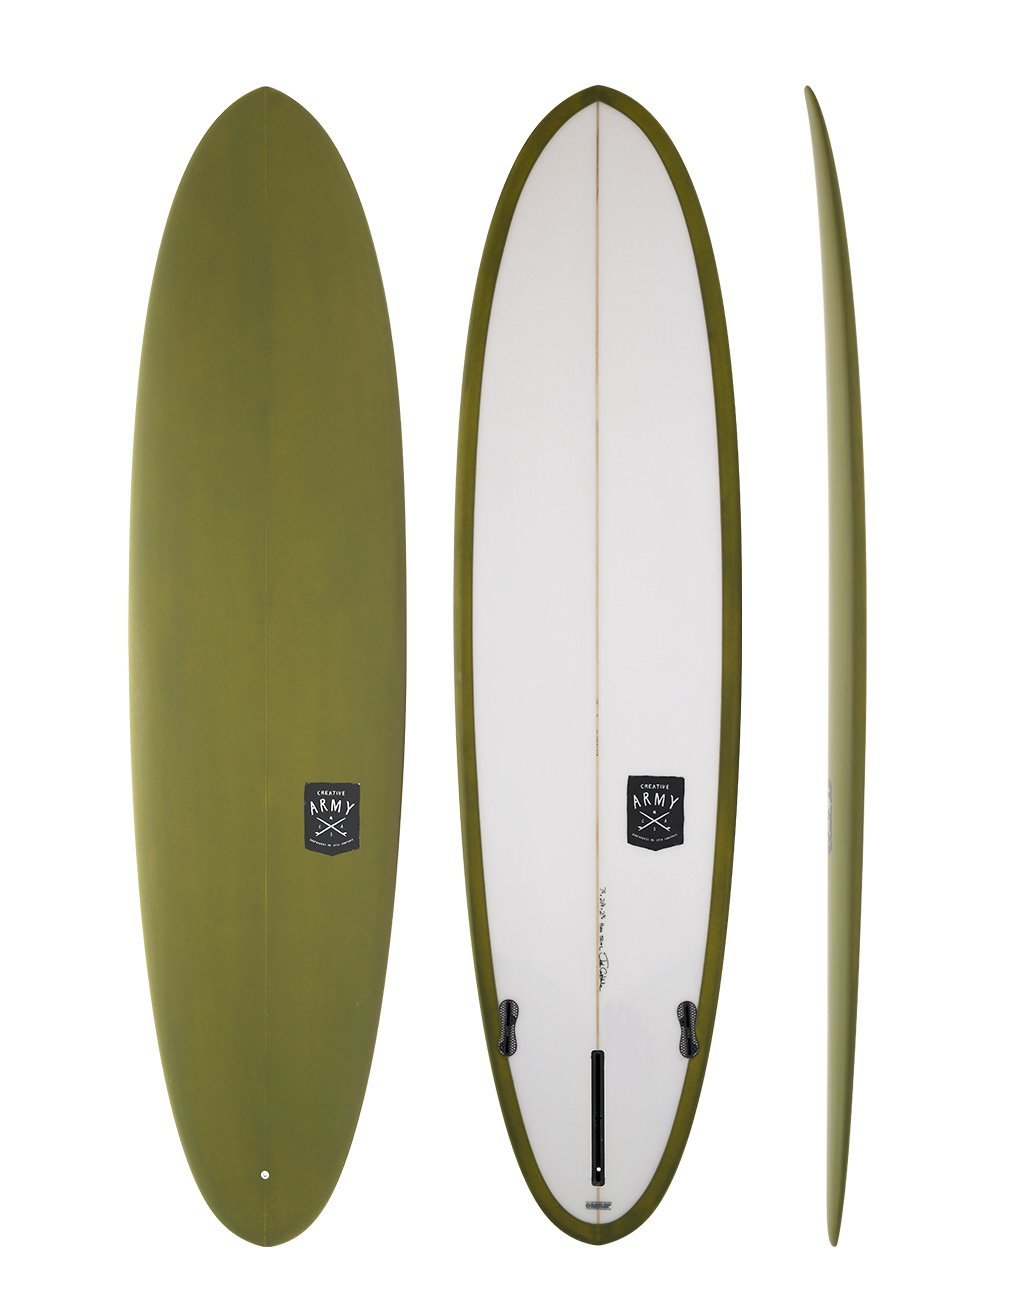 Creative Army Huevo - khaki and white mid length surfboard